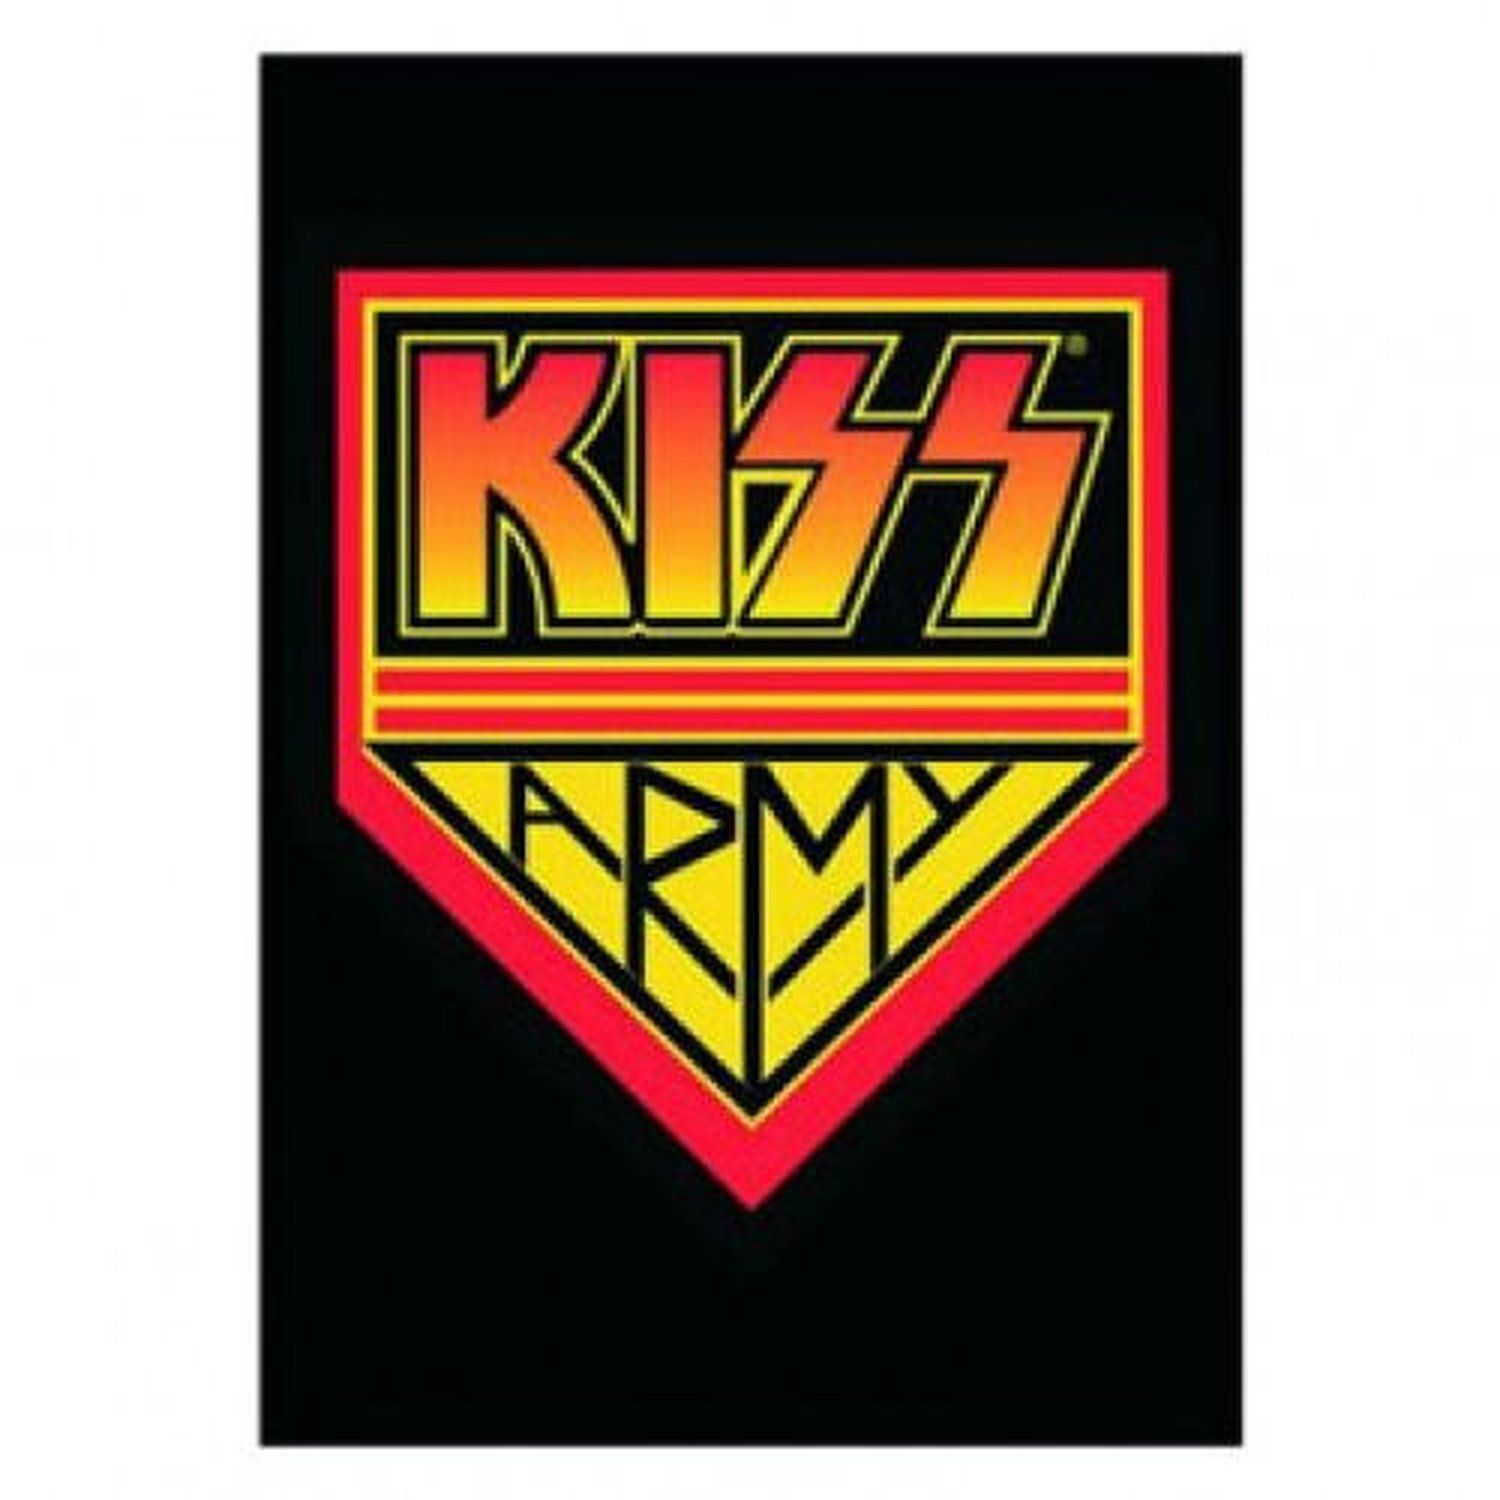 Kiss Army Logo